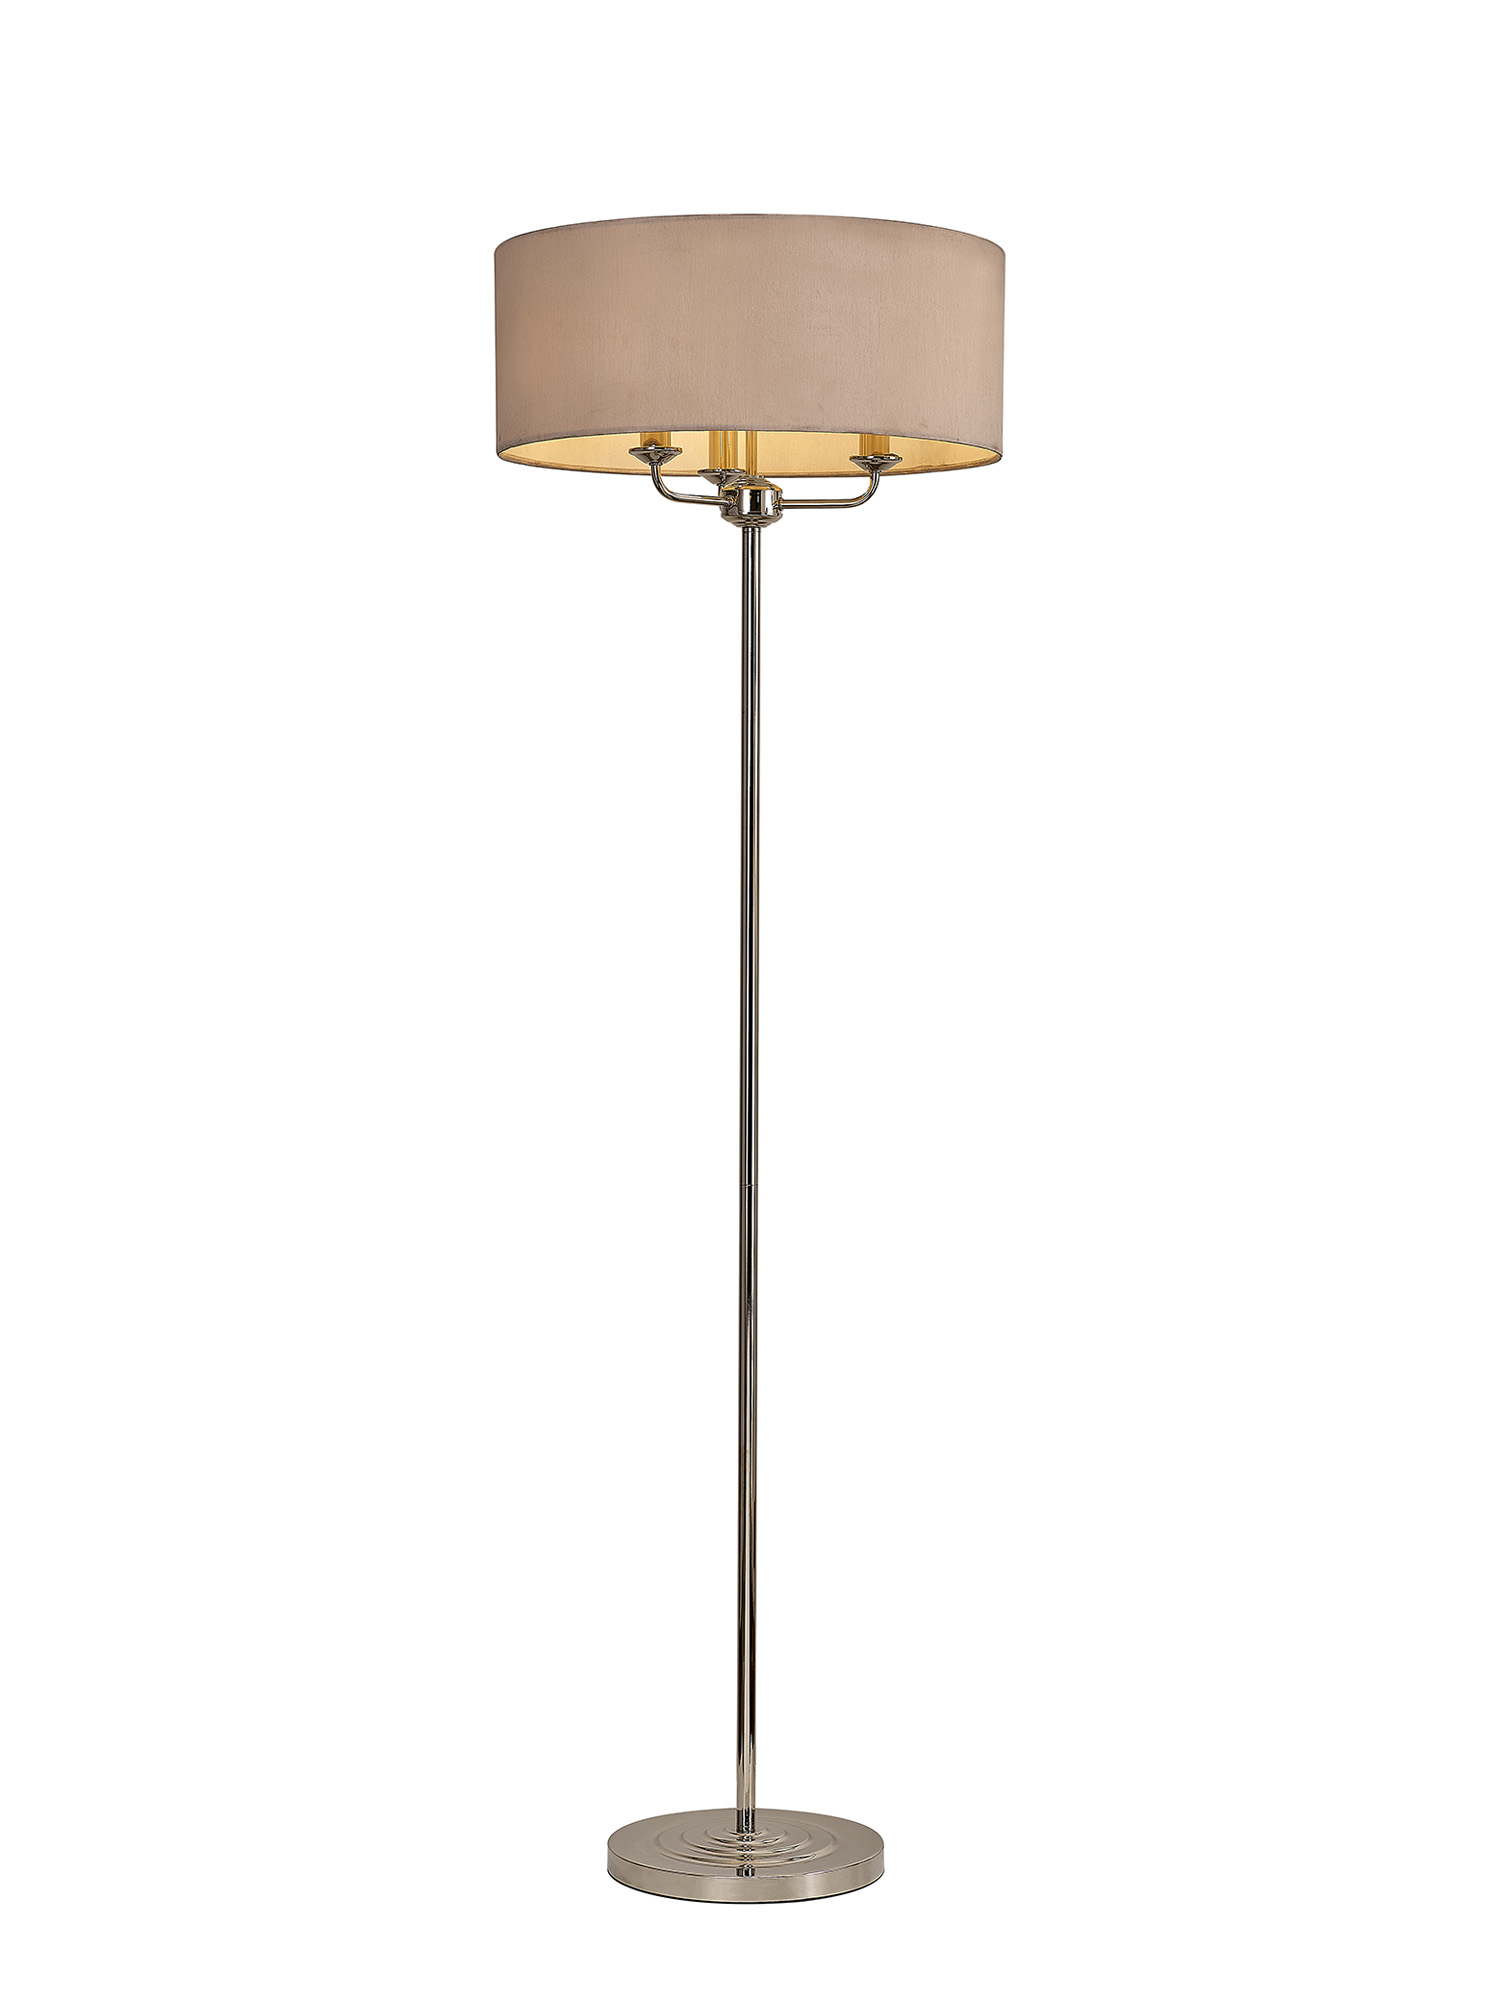 DK0896  Banyan 45cm 3 Light Floor Lamp Polished Nickel; Nude Beige